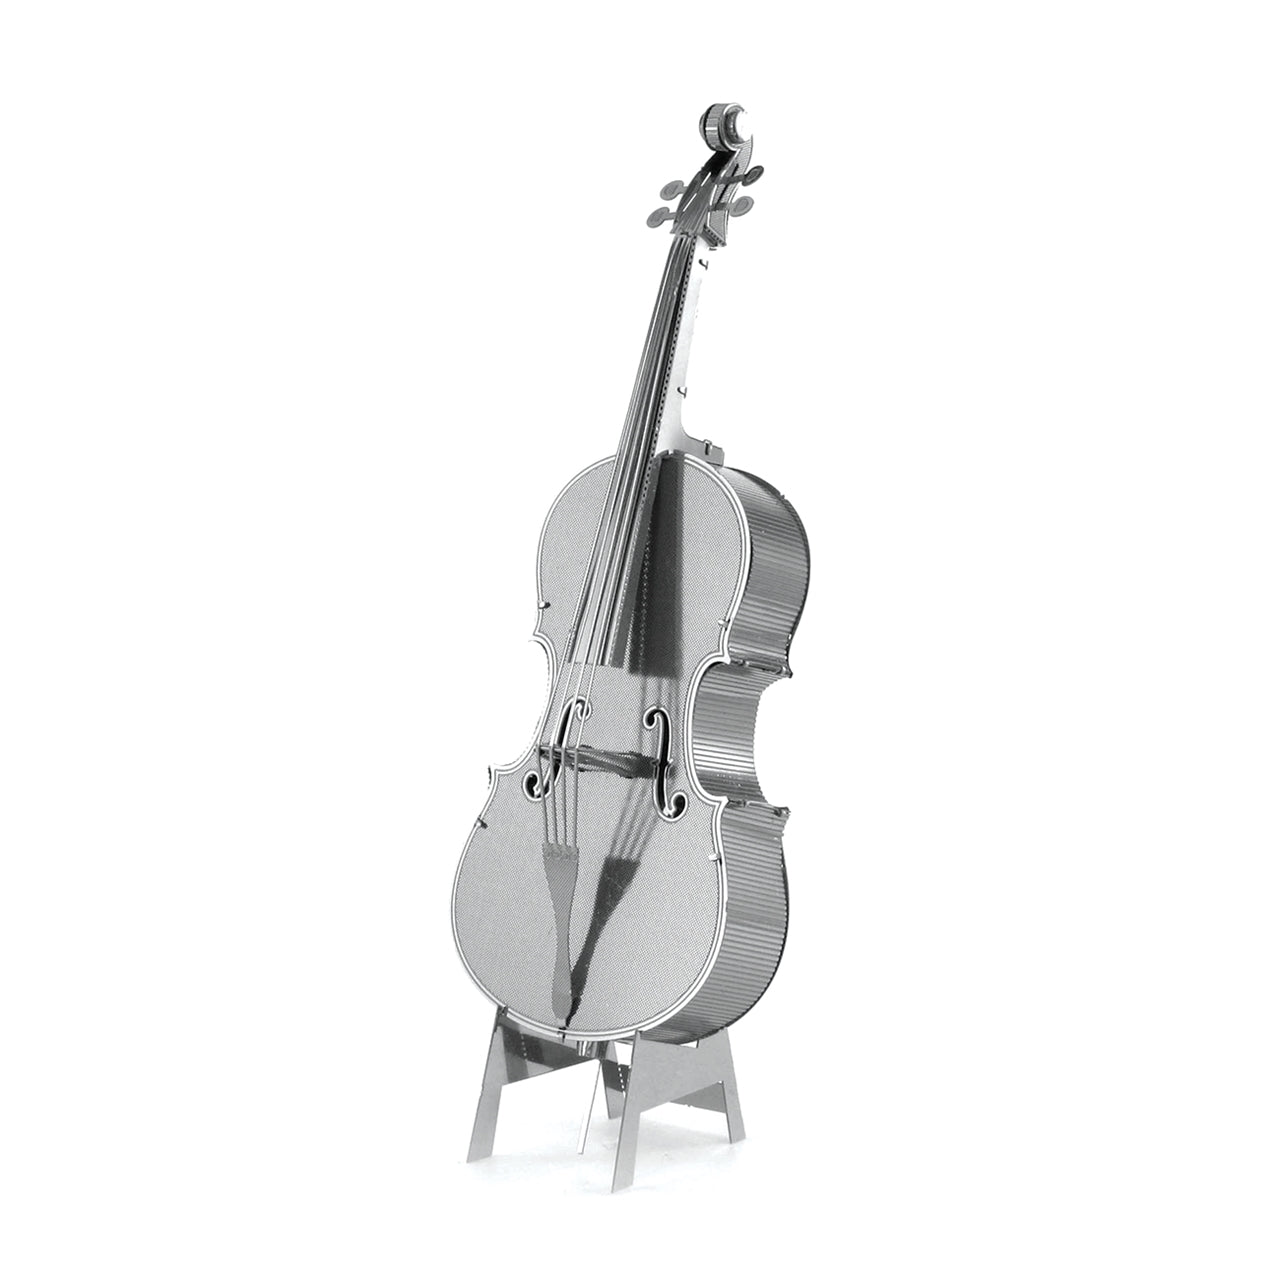 3D Bass Fiddle Metal Model Kit